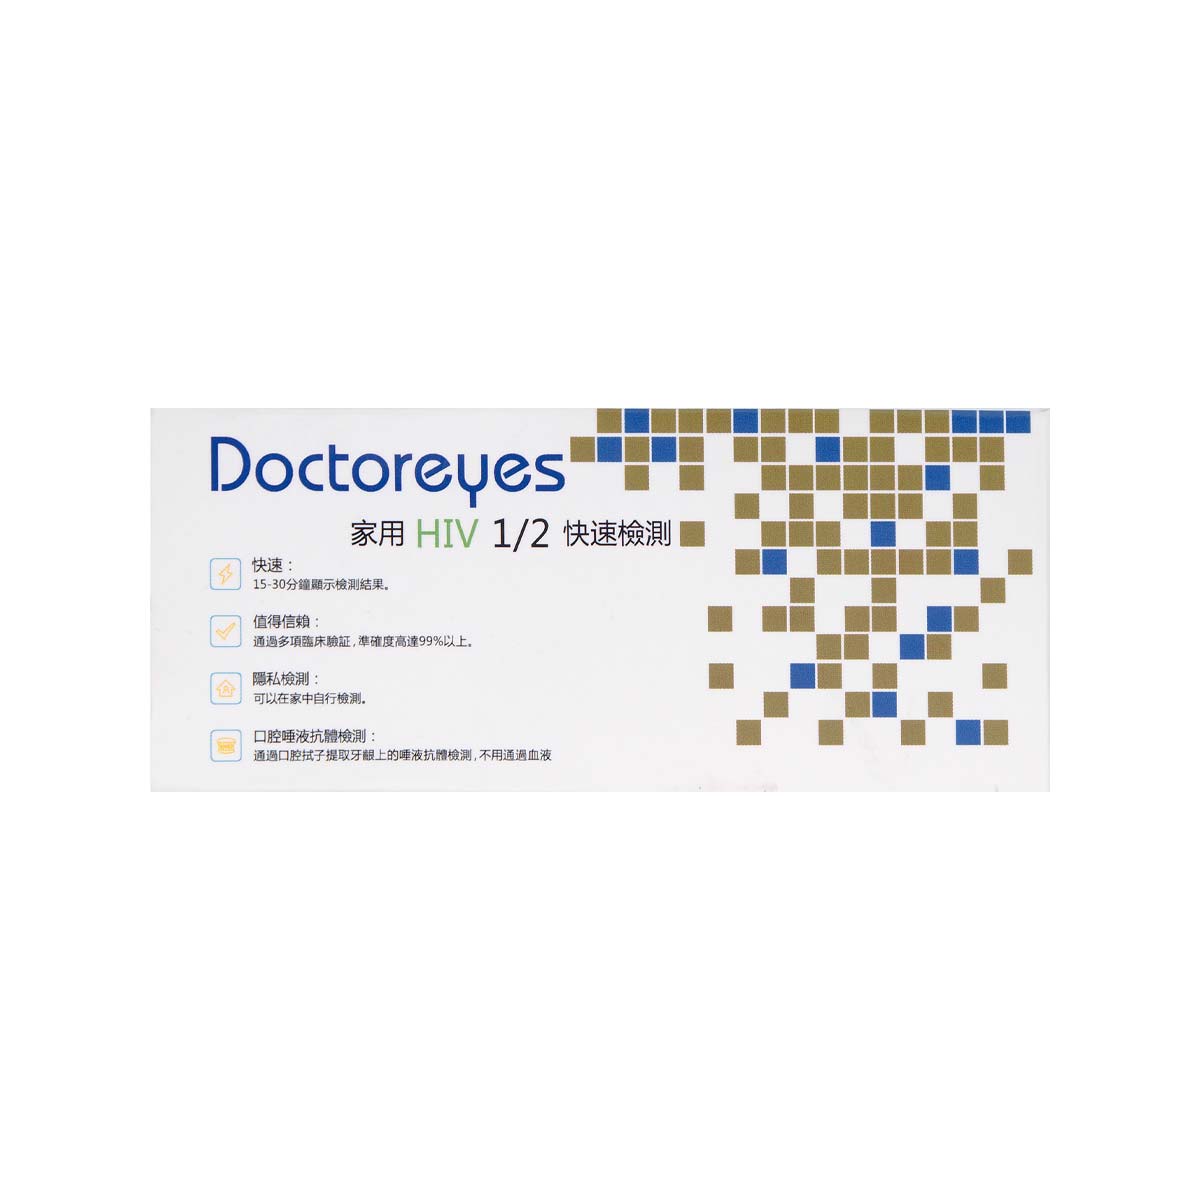 Doctoreyes 家用愛滋病病毒 (HIV) 1/2 快速檢測 口腔黏液檢驗器-p_2